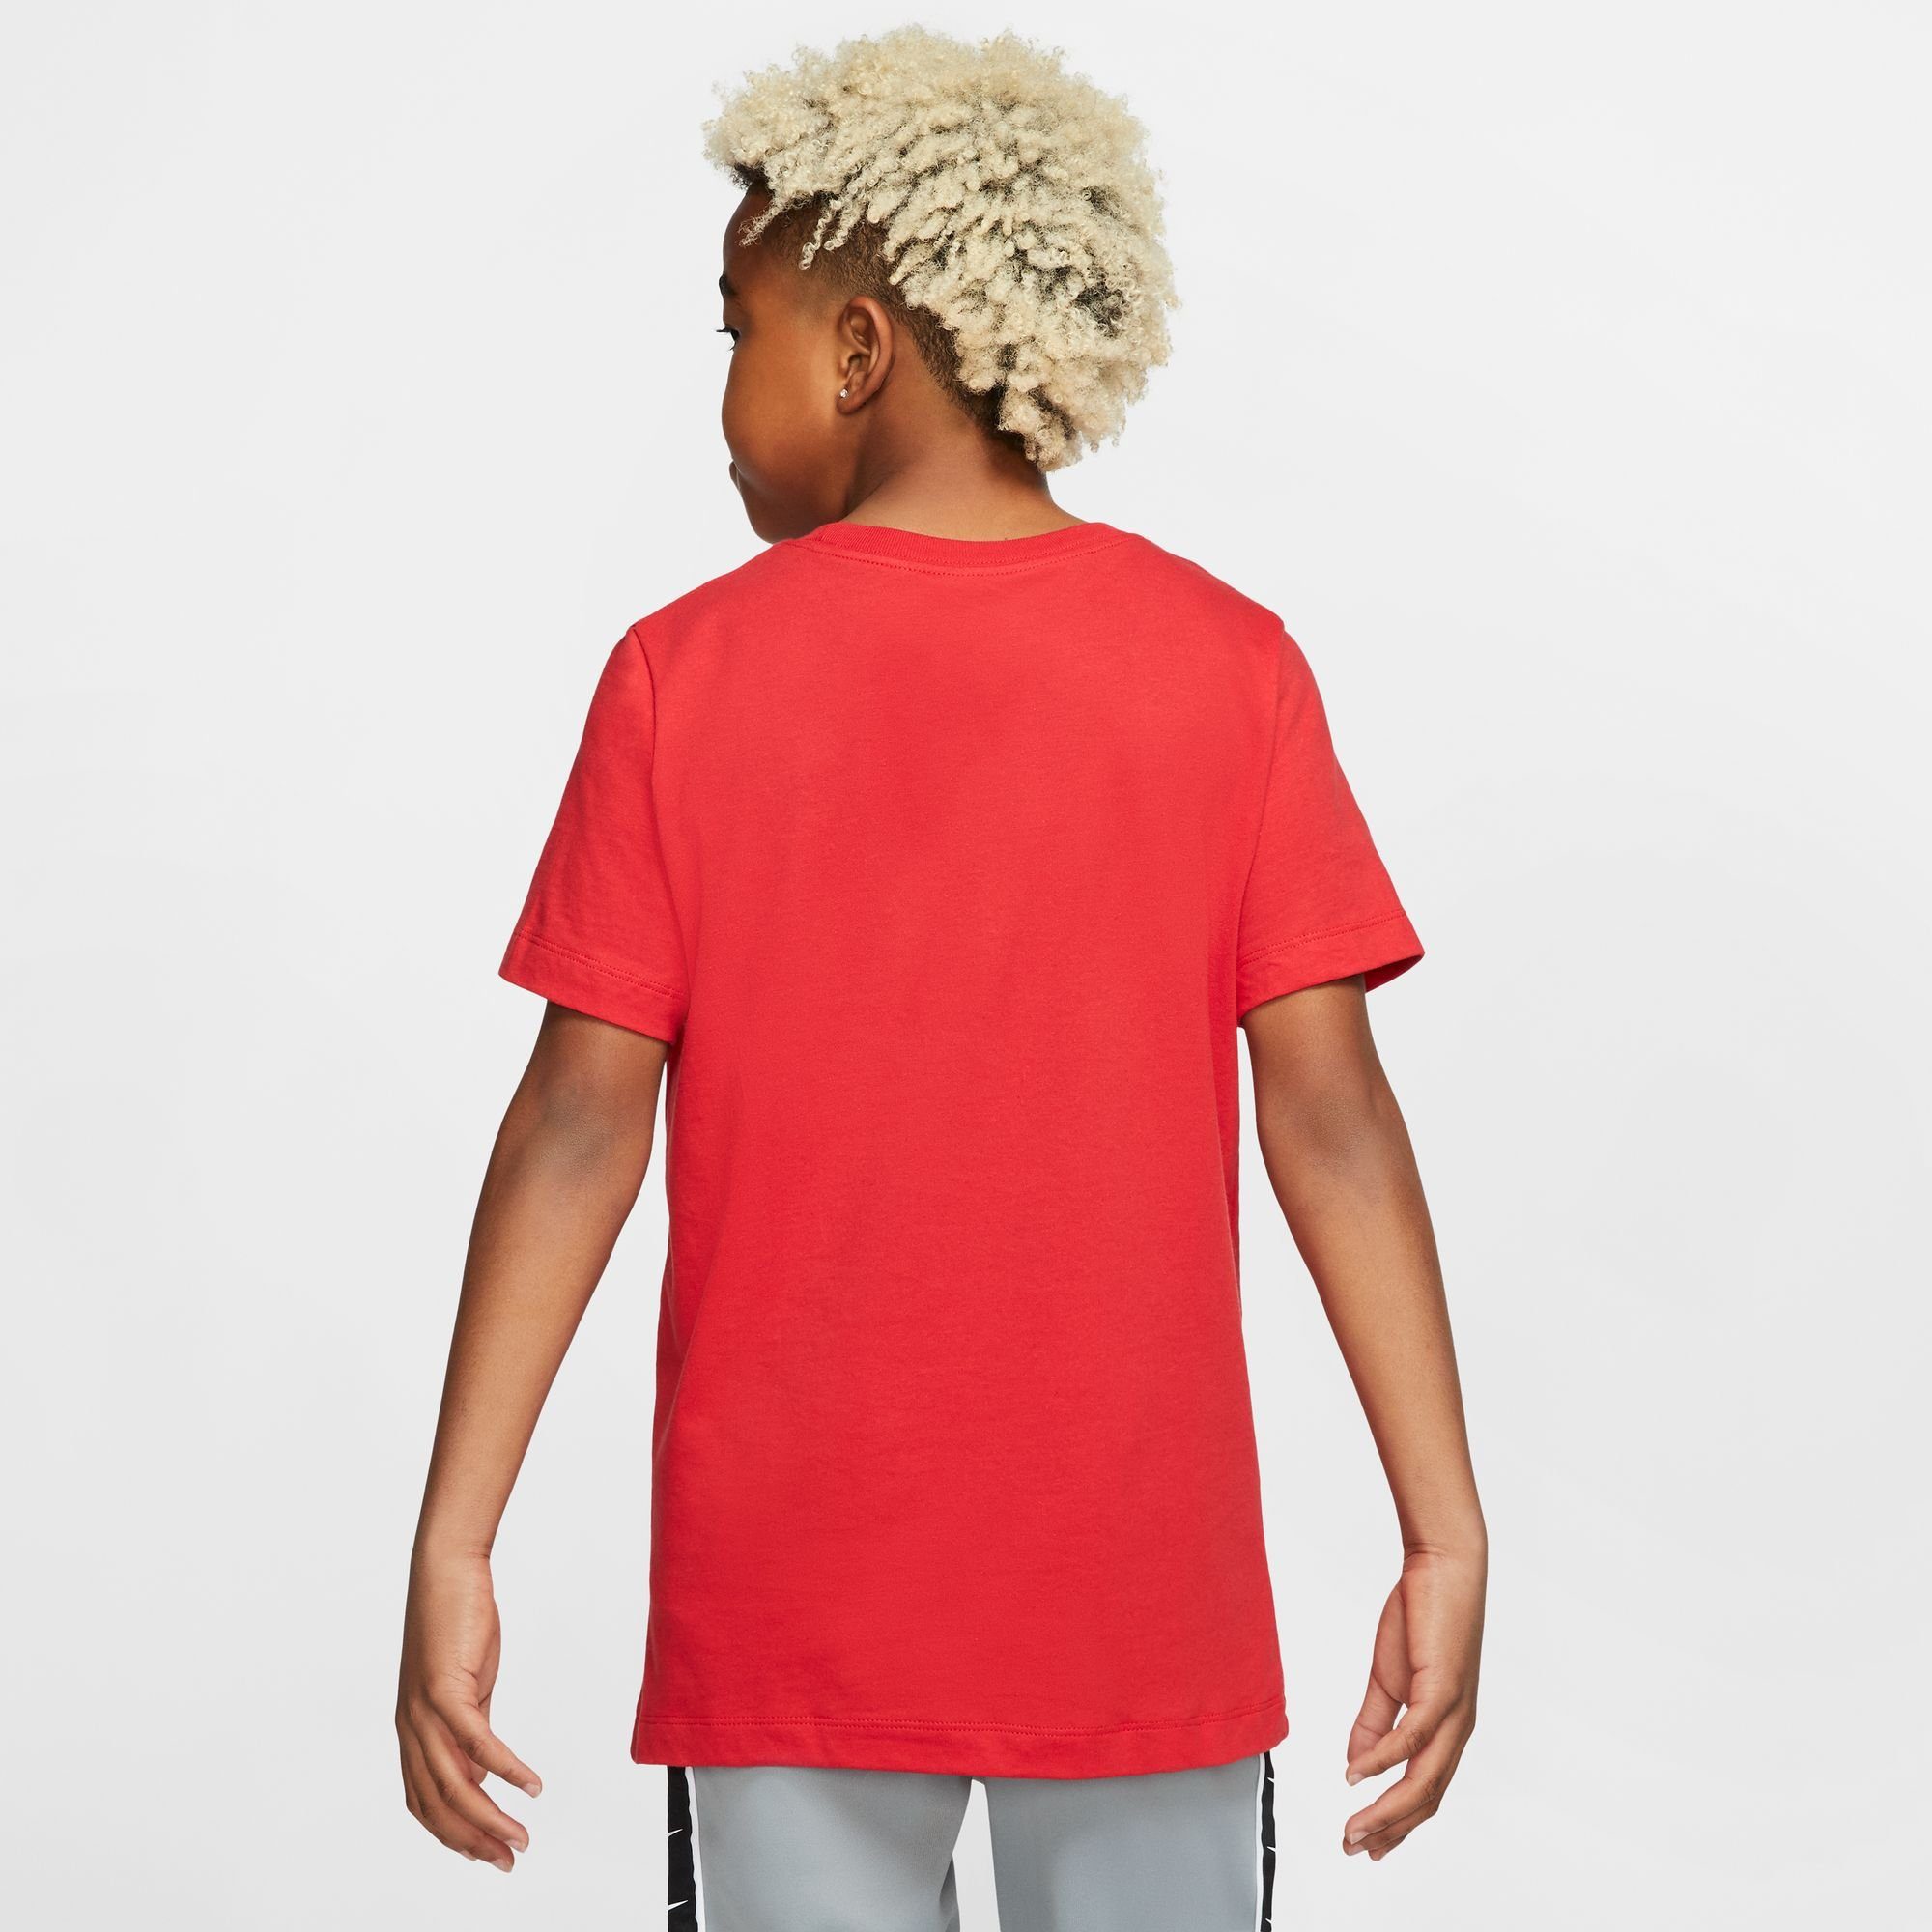 T-SHIRT Nike T-Shirt Sportswear KIDS' BIG RED/BLACK COTTON UNIVERSITY